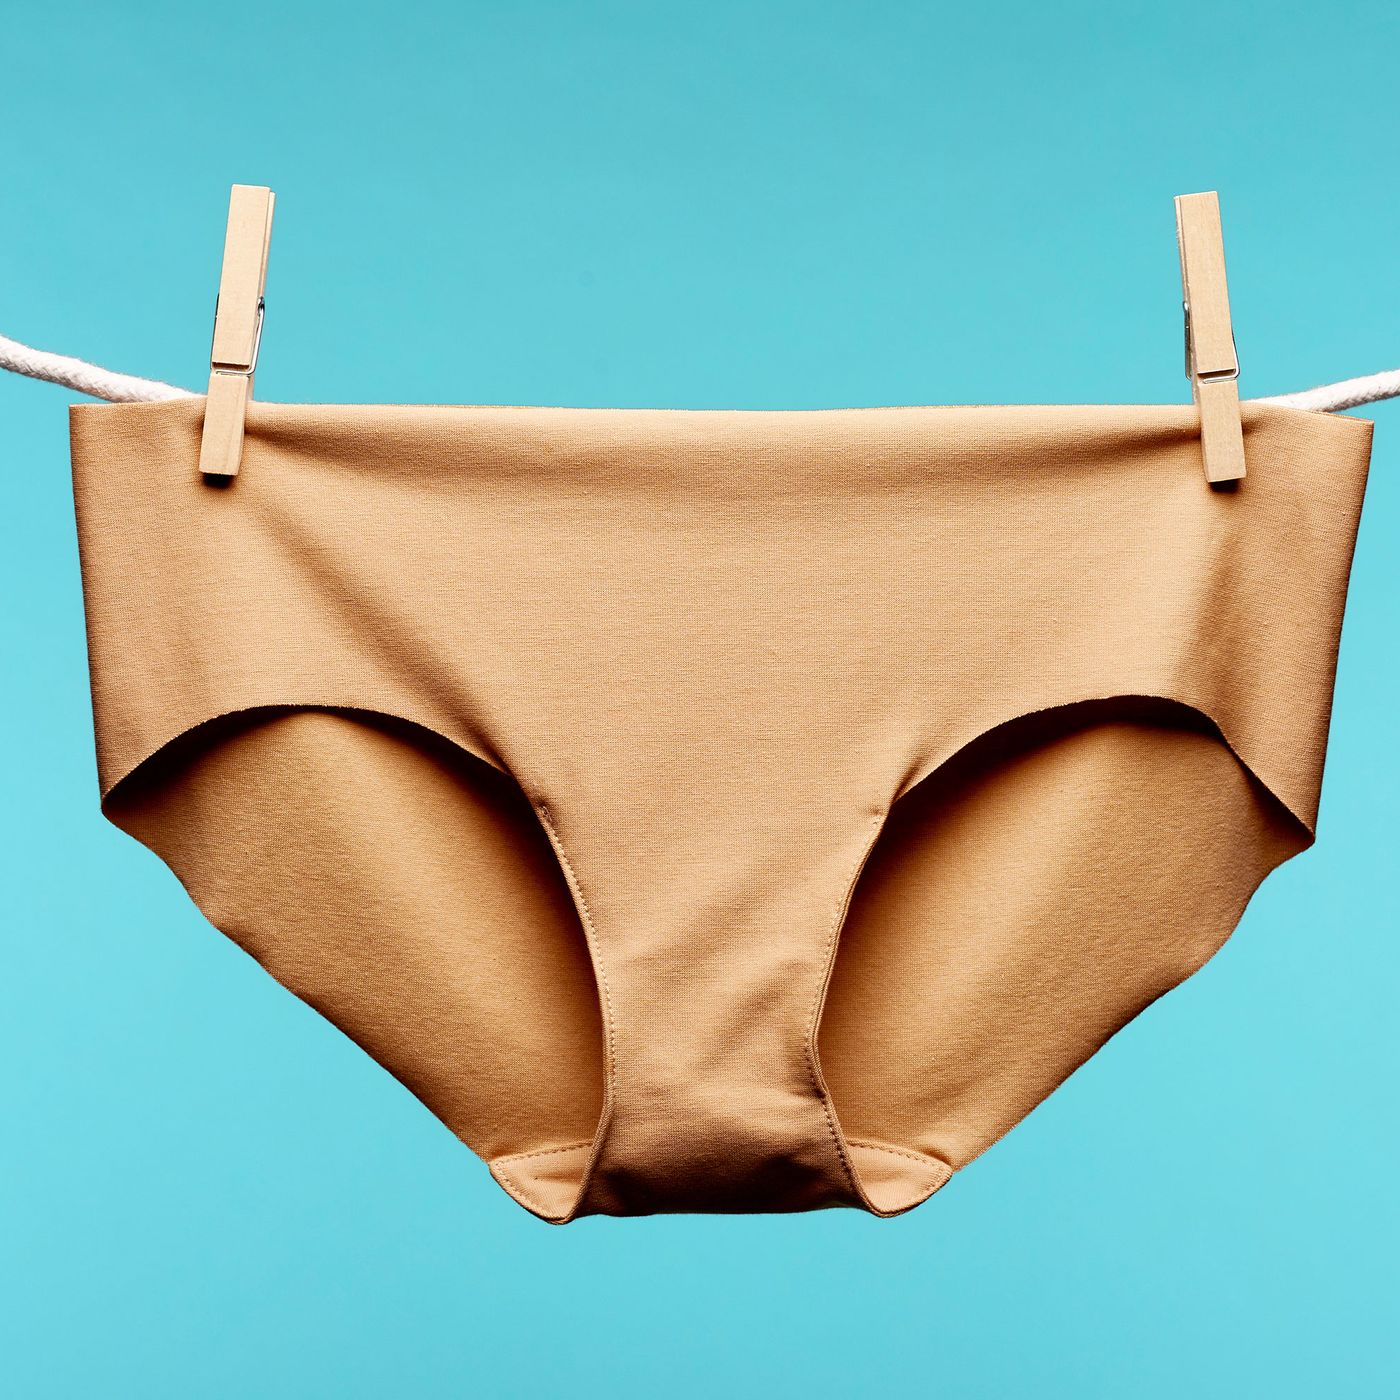 brandi reeser share pics of underwear photos